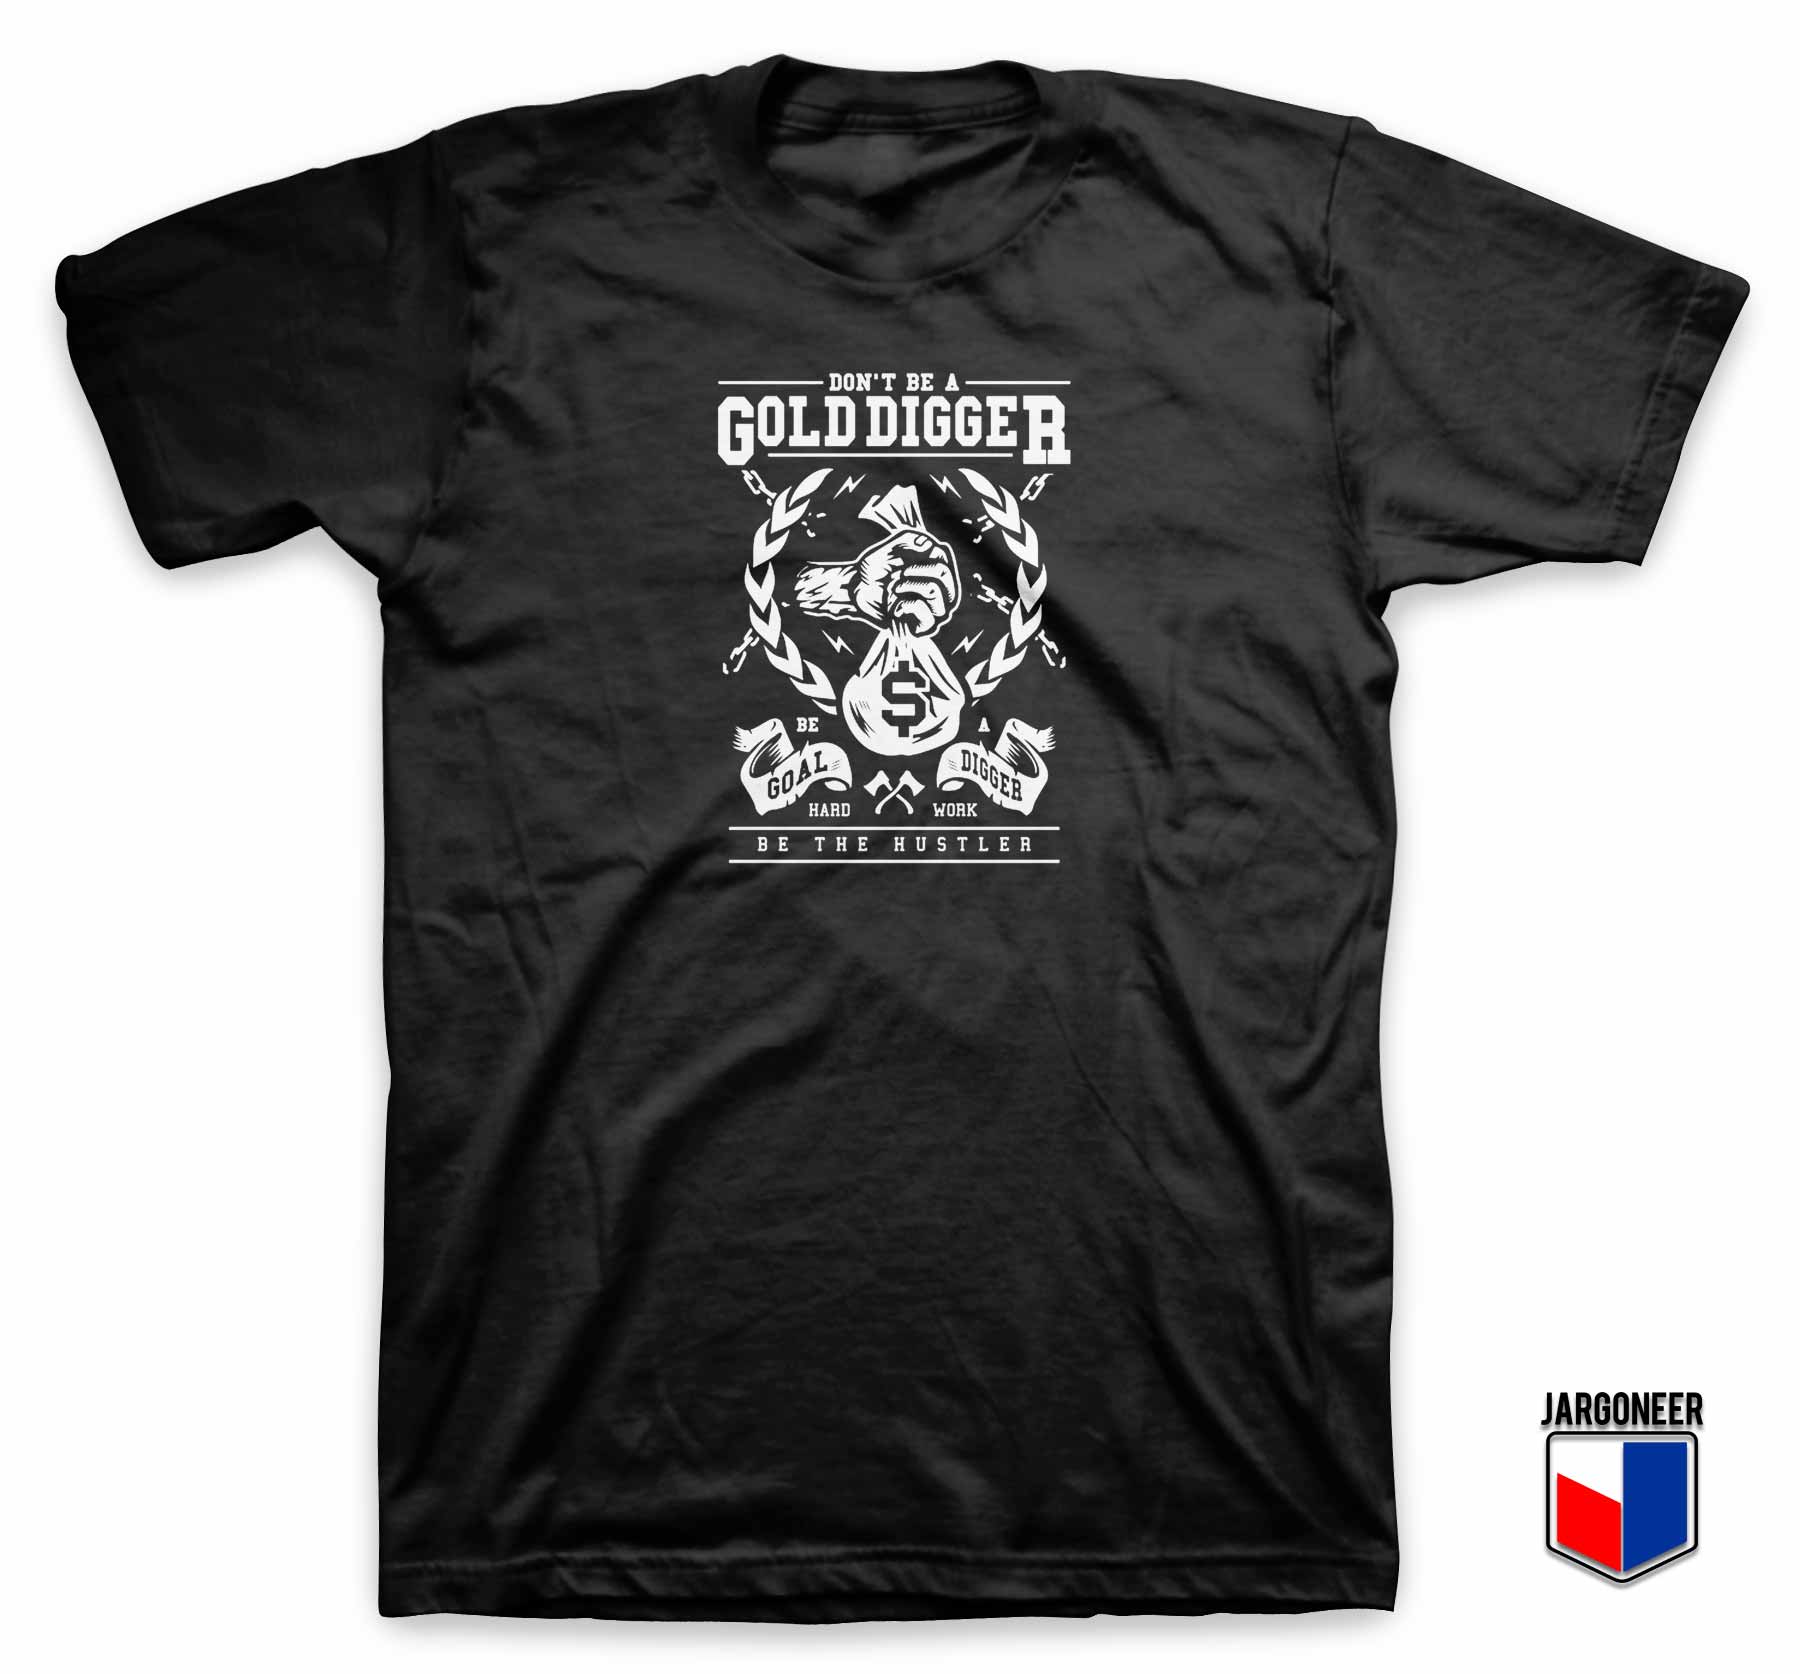 Gold Digger 1 - Shop Unique Graphic Cool Shirt Designs